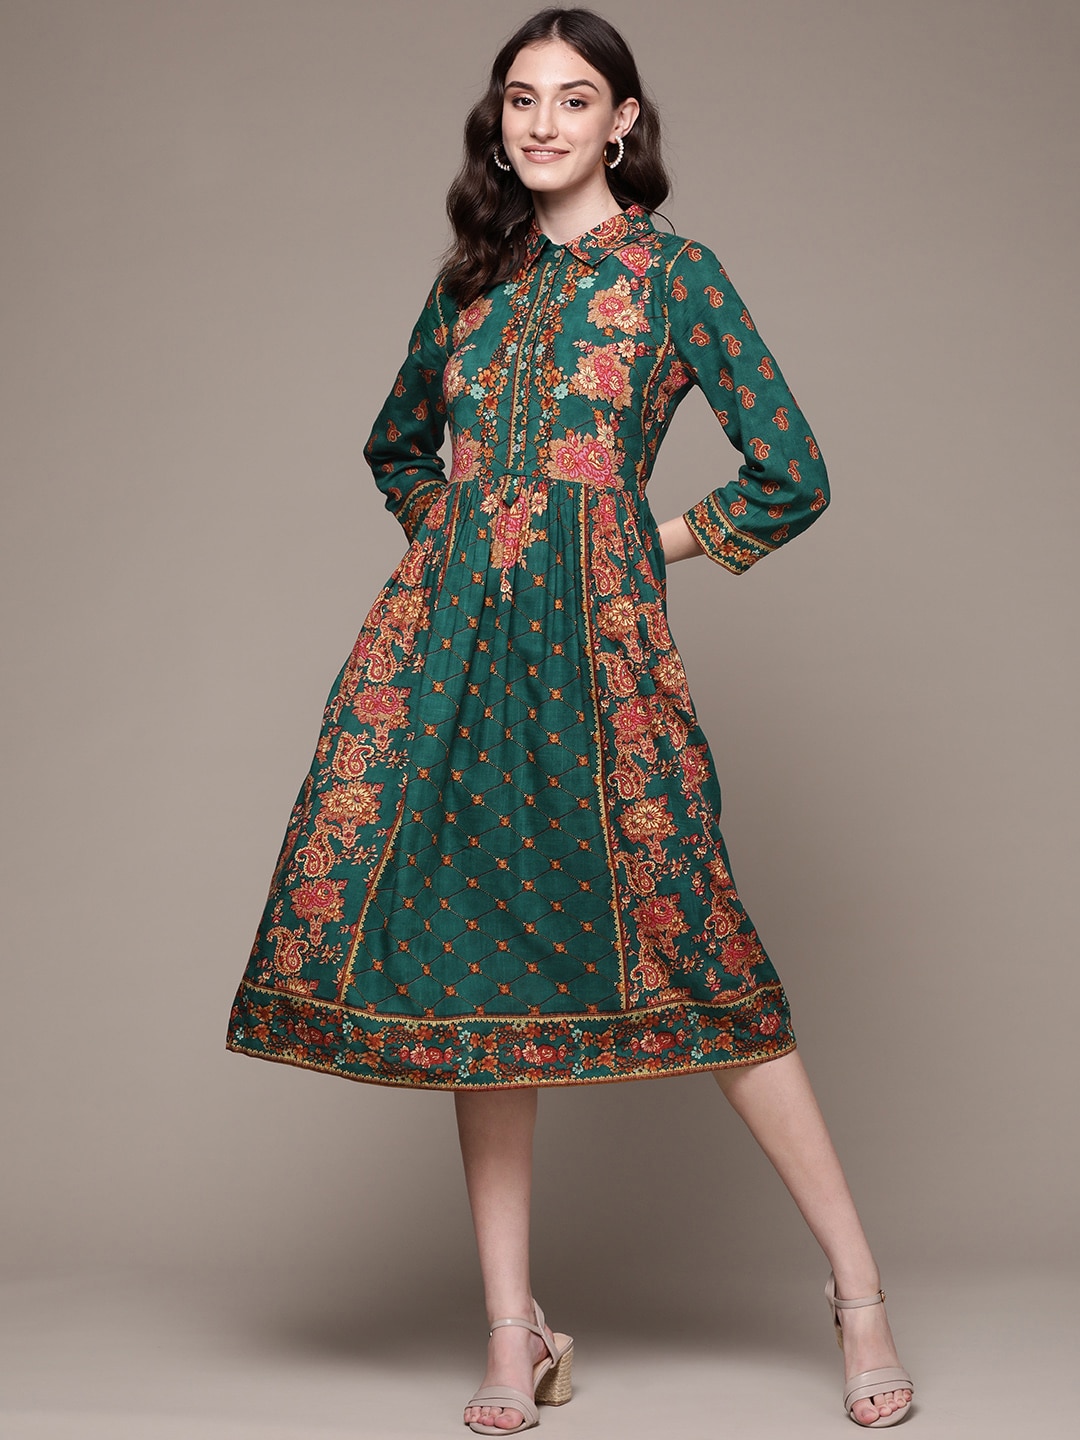 aarke Ritu Kumar Women Green & Orange Ethnic Motifs Ethnic Midi Dress Price in India